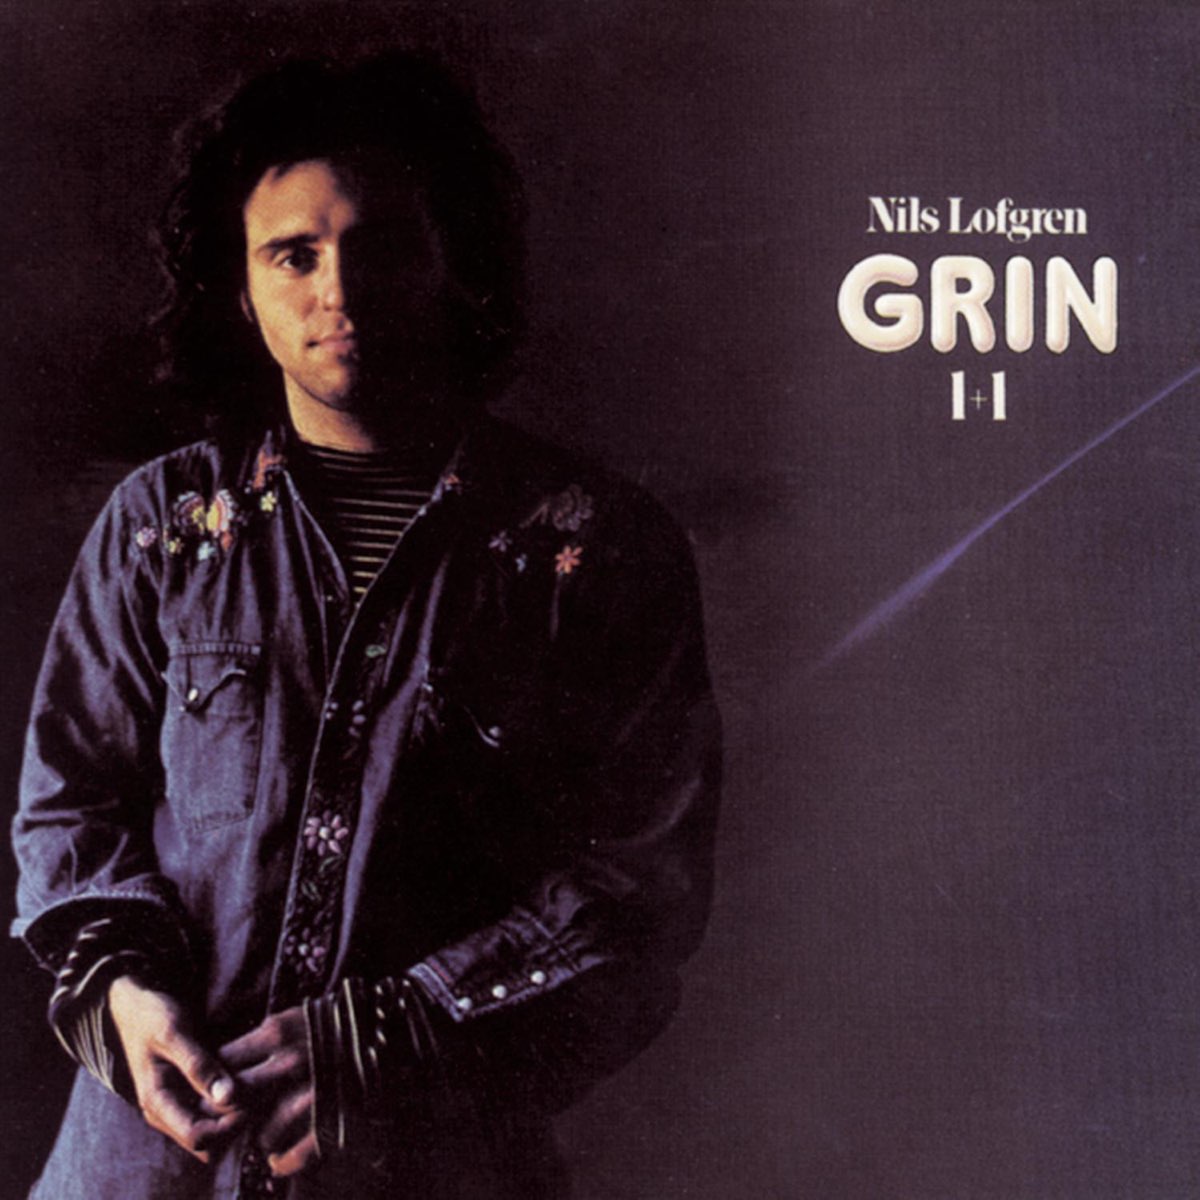 Grin 1 + 1 by Nils Lofgren on Apple Music